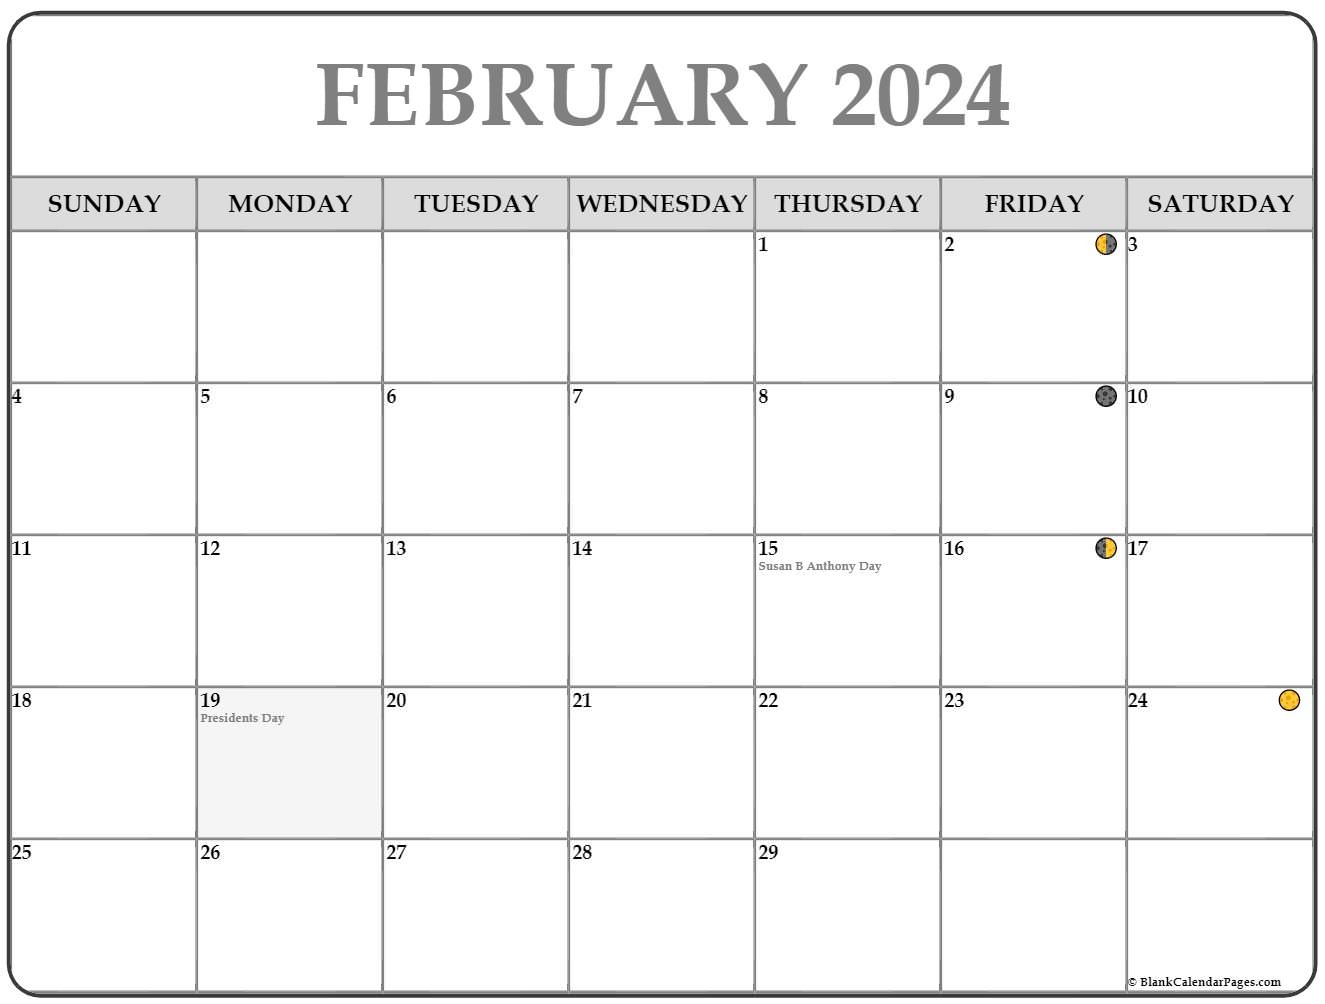 February 2024 Lunar Calendar Moon Phase Calendar - Free Printable 2024 Calendar With Moon Phases Cosmic Events